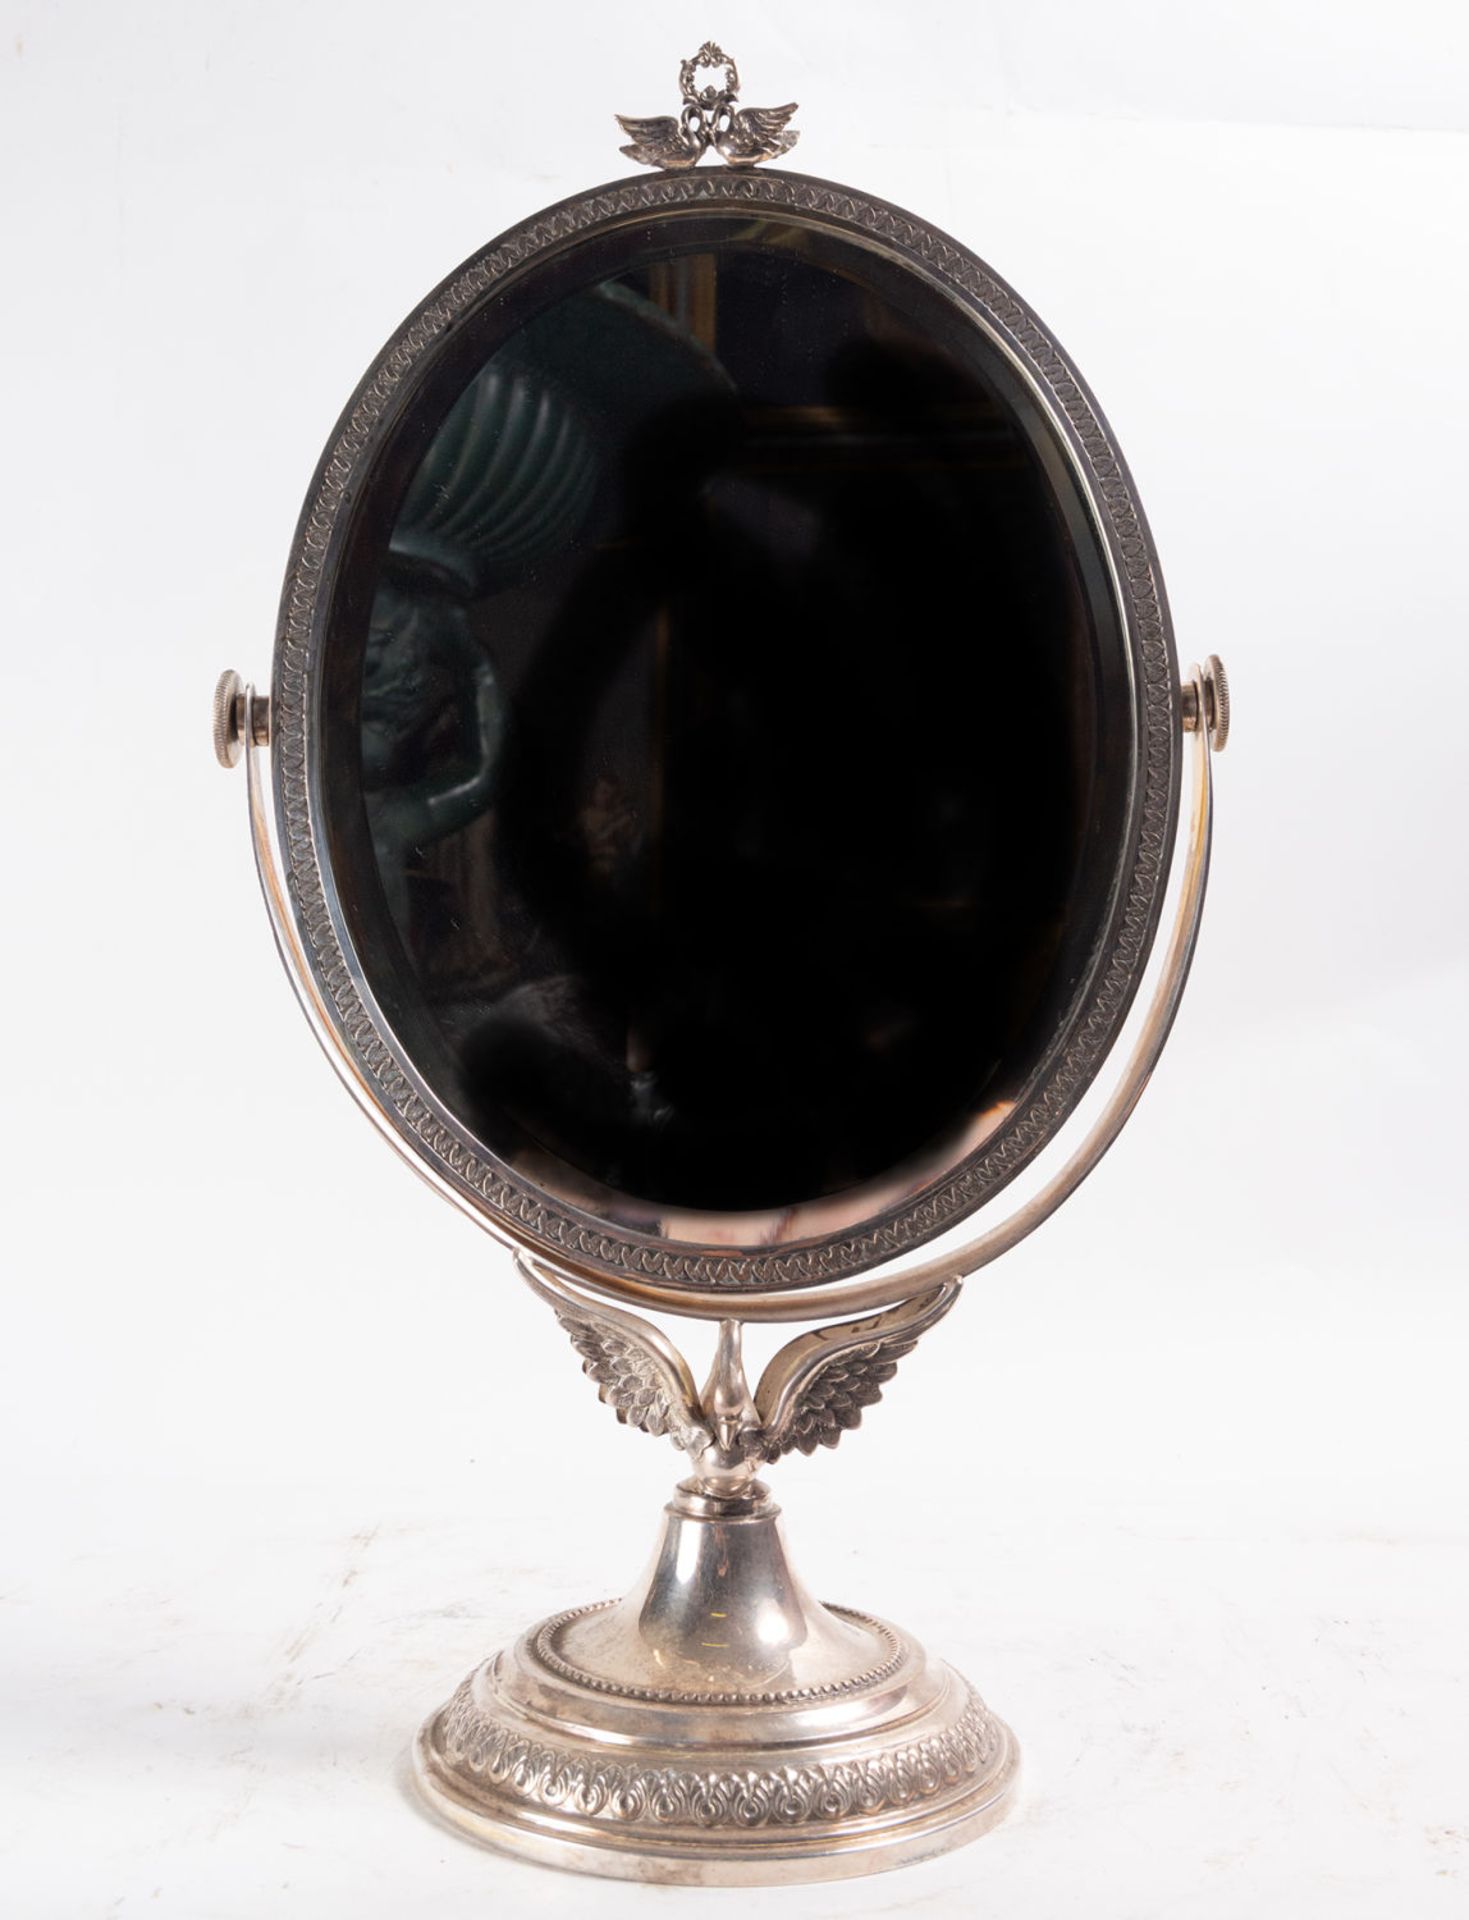 Empire style silver mirror, 19th century - Image 2 of 2